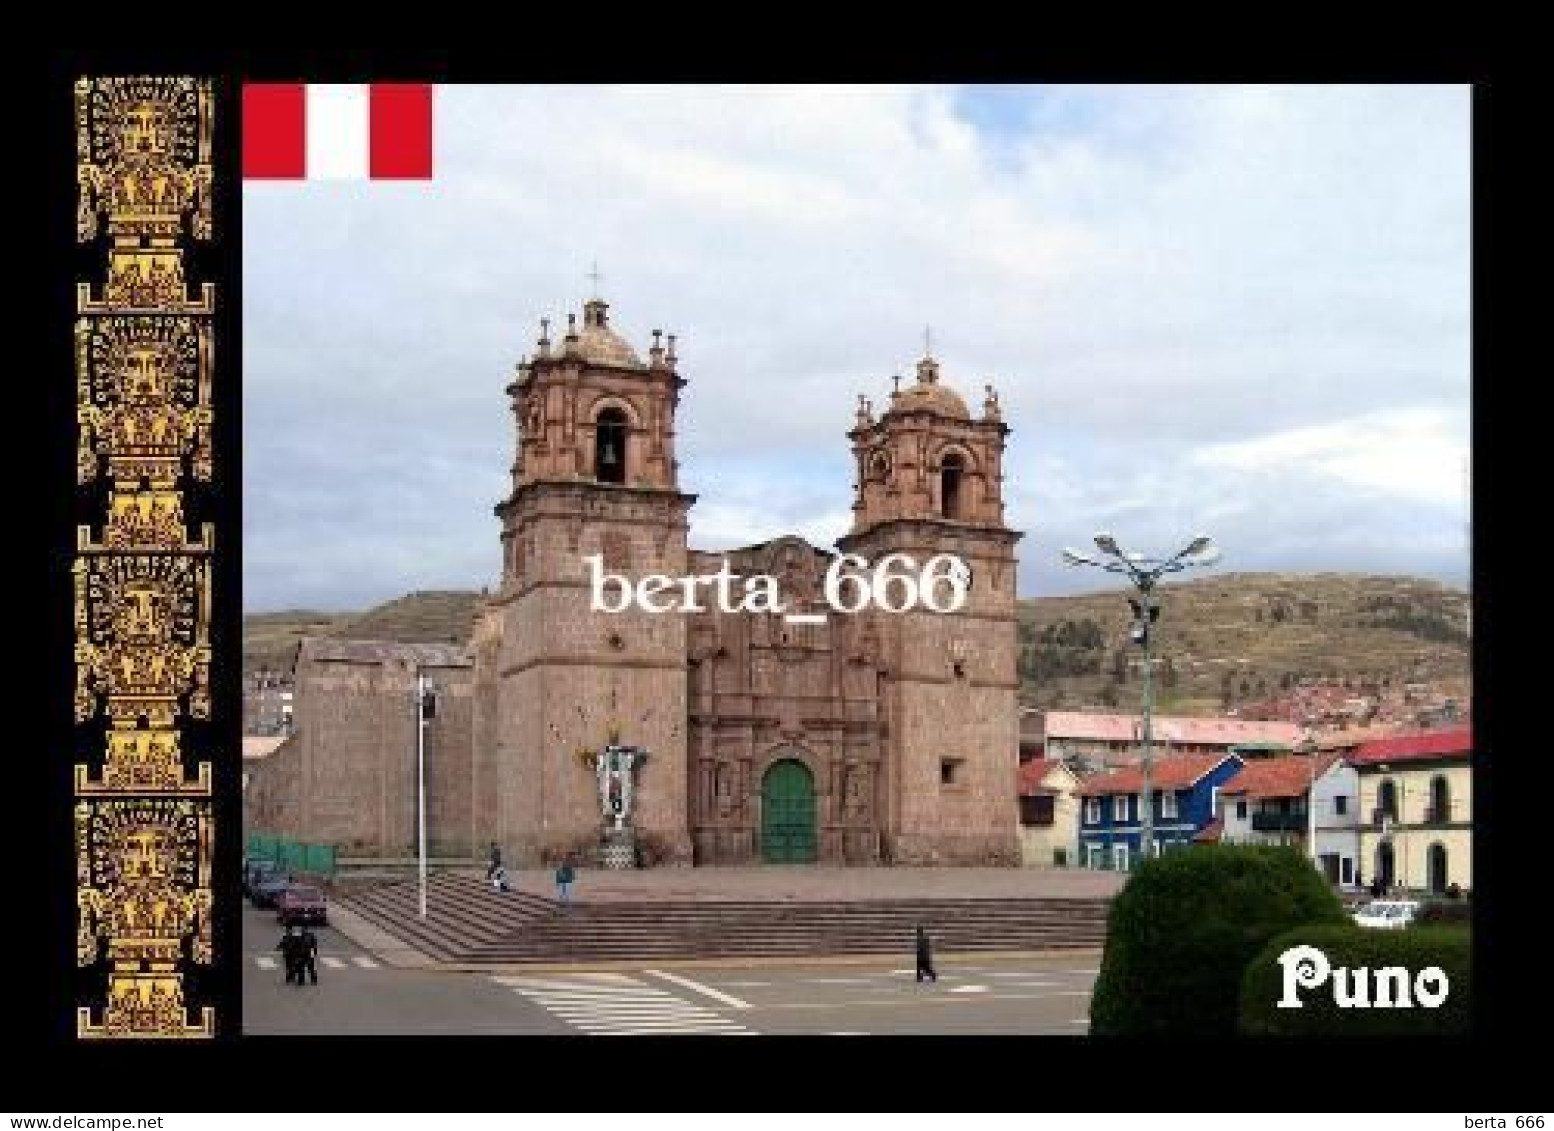 Peru Puno Cathedral New Postcard - Perú